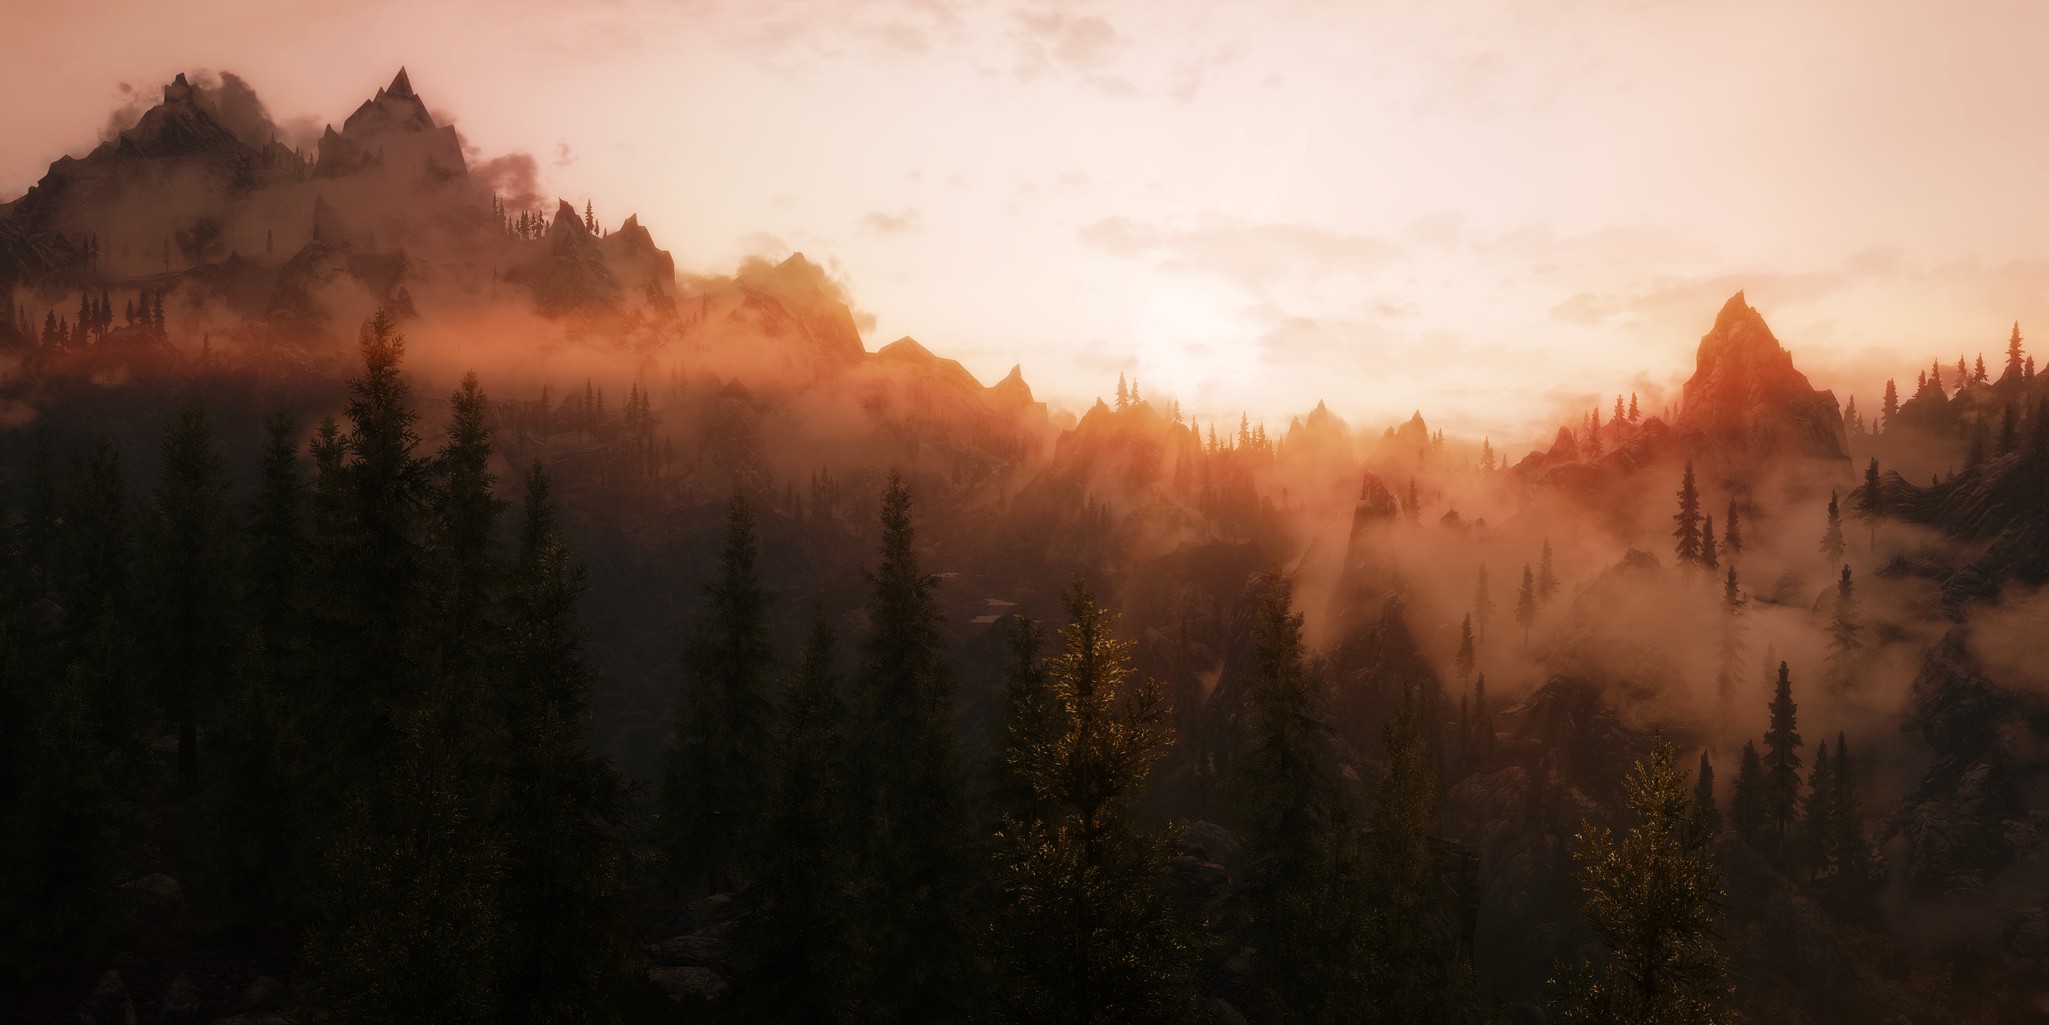 General 2049x1025 mist trees forest sunset mountains The Elder Scrolls V: Skyrim video games RPG PC gaming screen shot